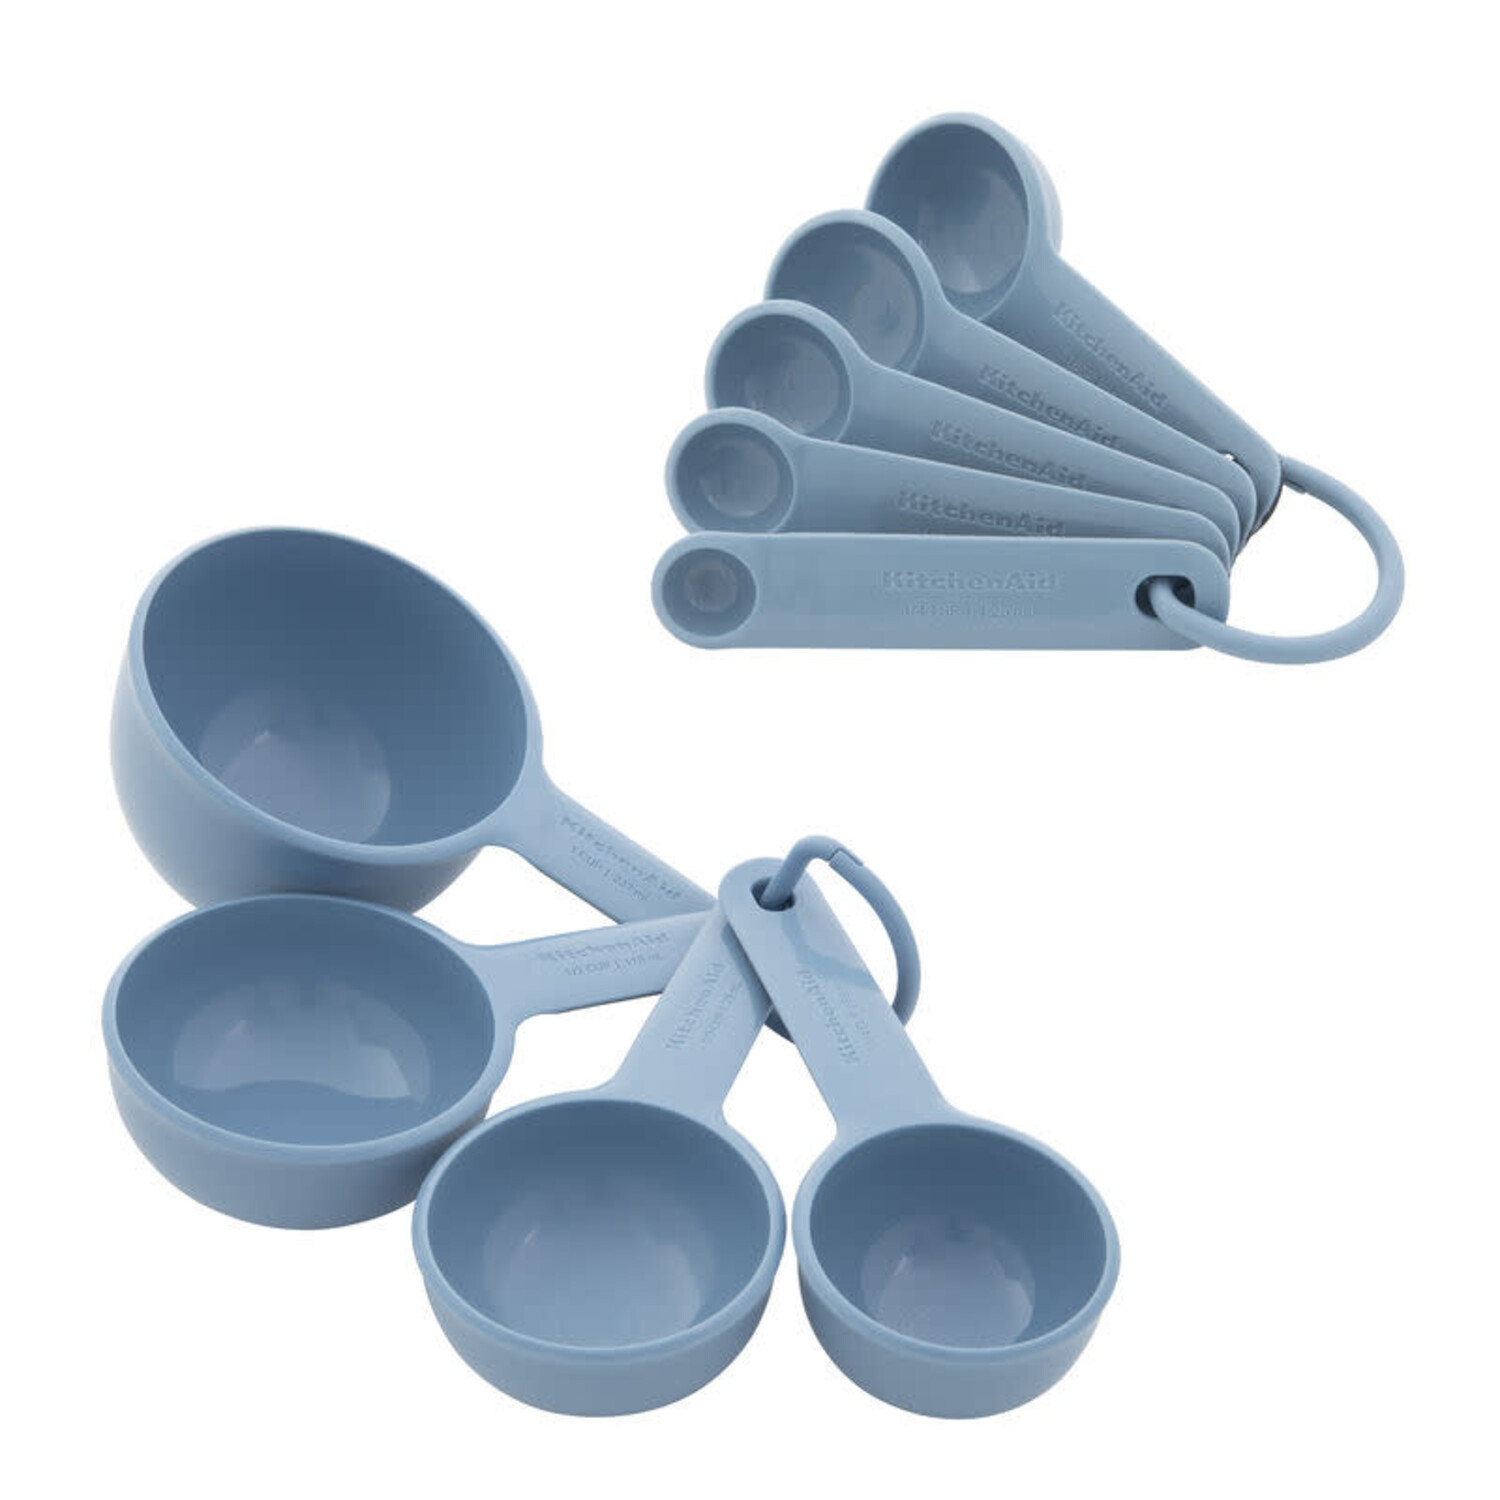 Kitchenaid Measuring Spoons - 5 spoons